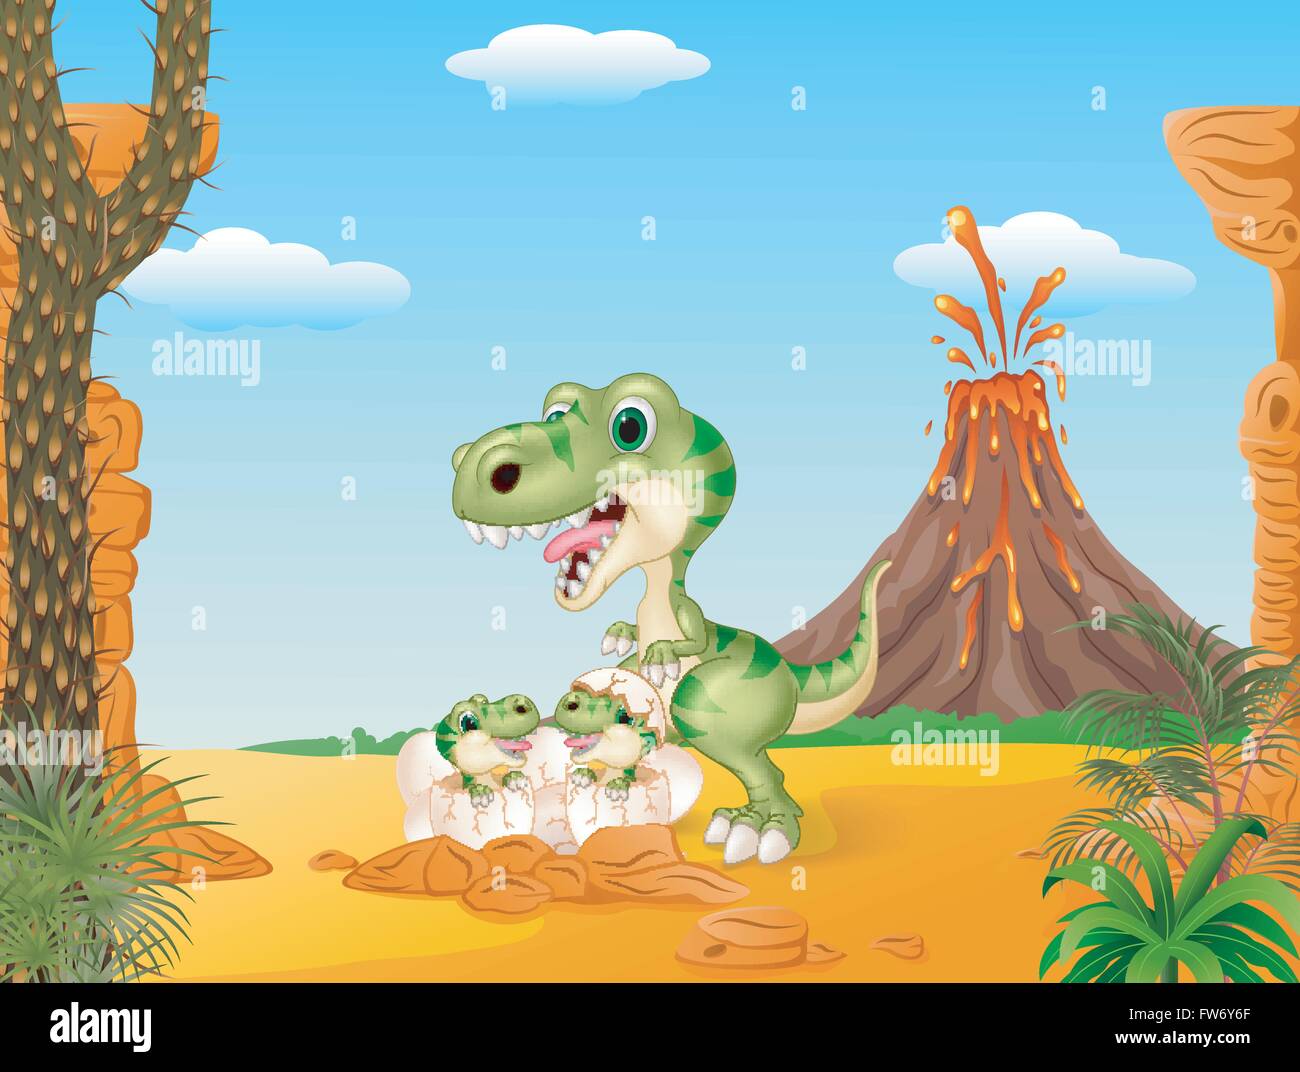 Download Cartoon mom tyrannosaurus dinosaur and baby dinosaurs ...